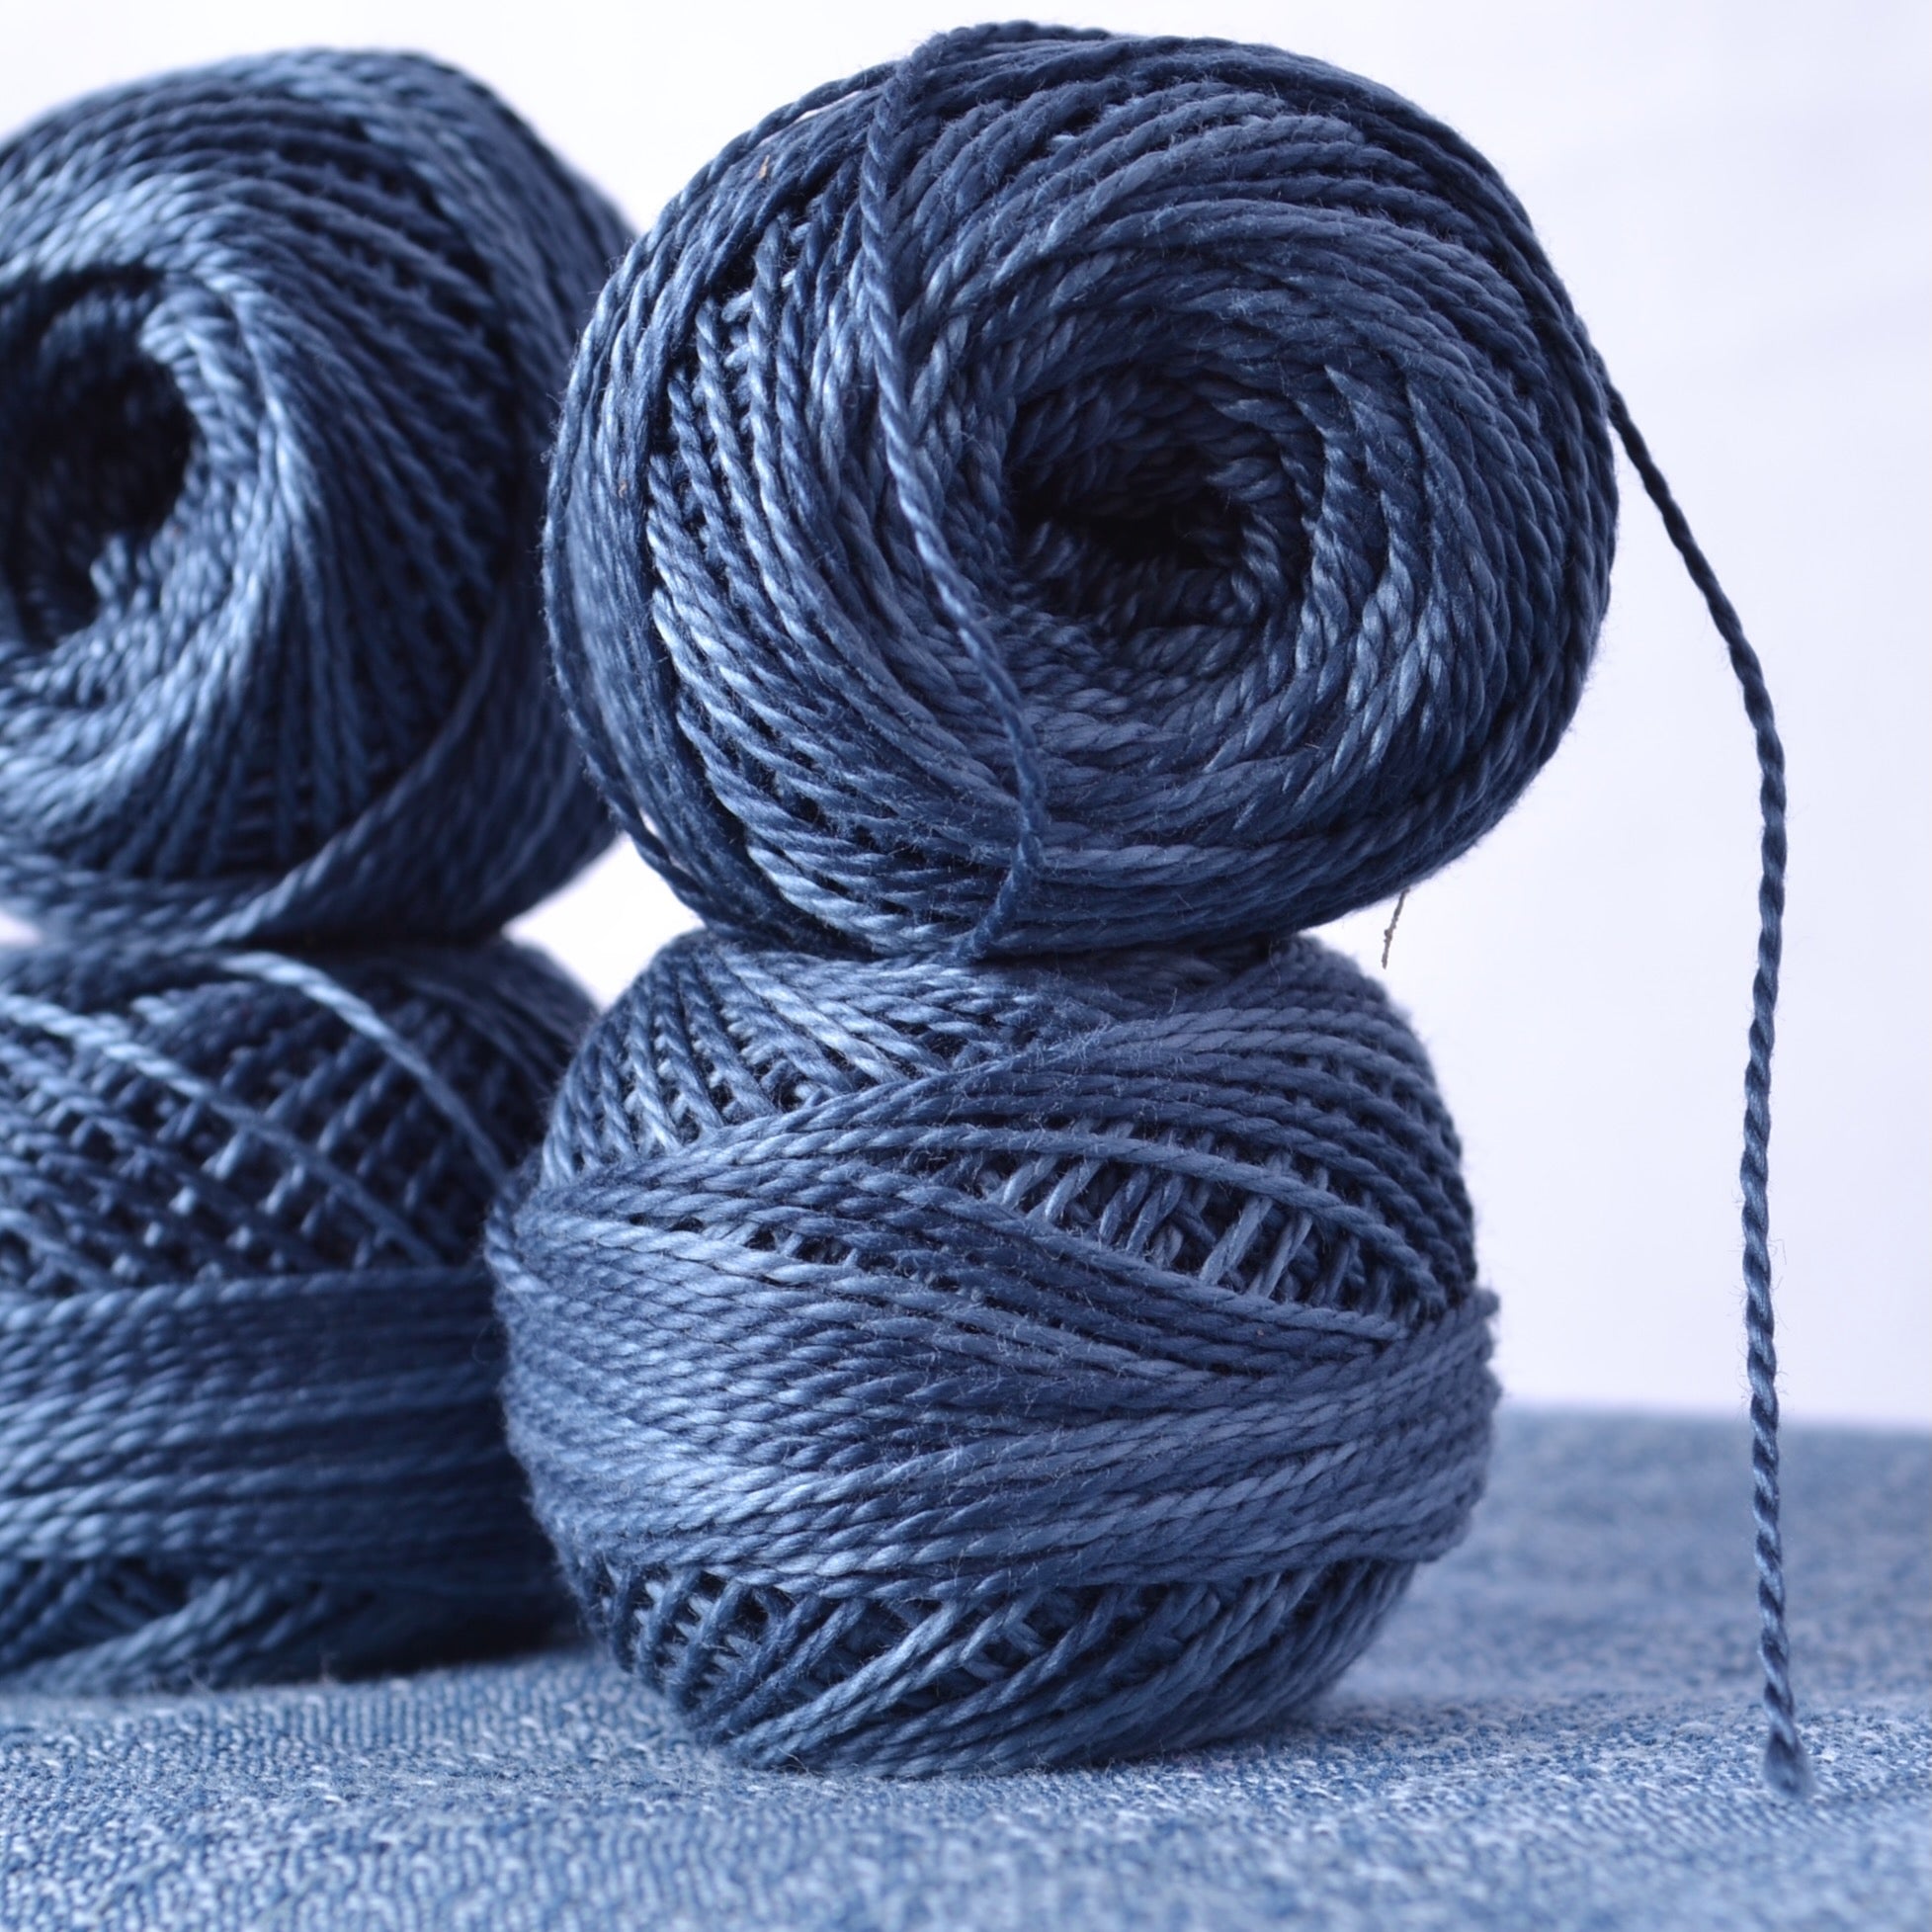 Darkened Blue twice dyed Valdani cotton thread